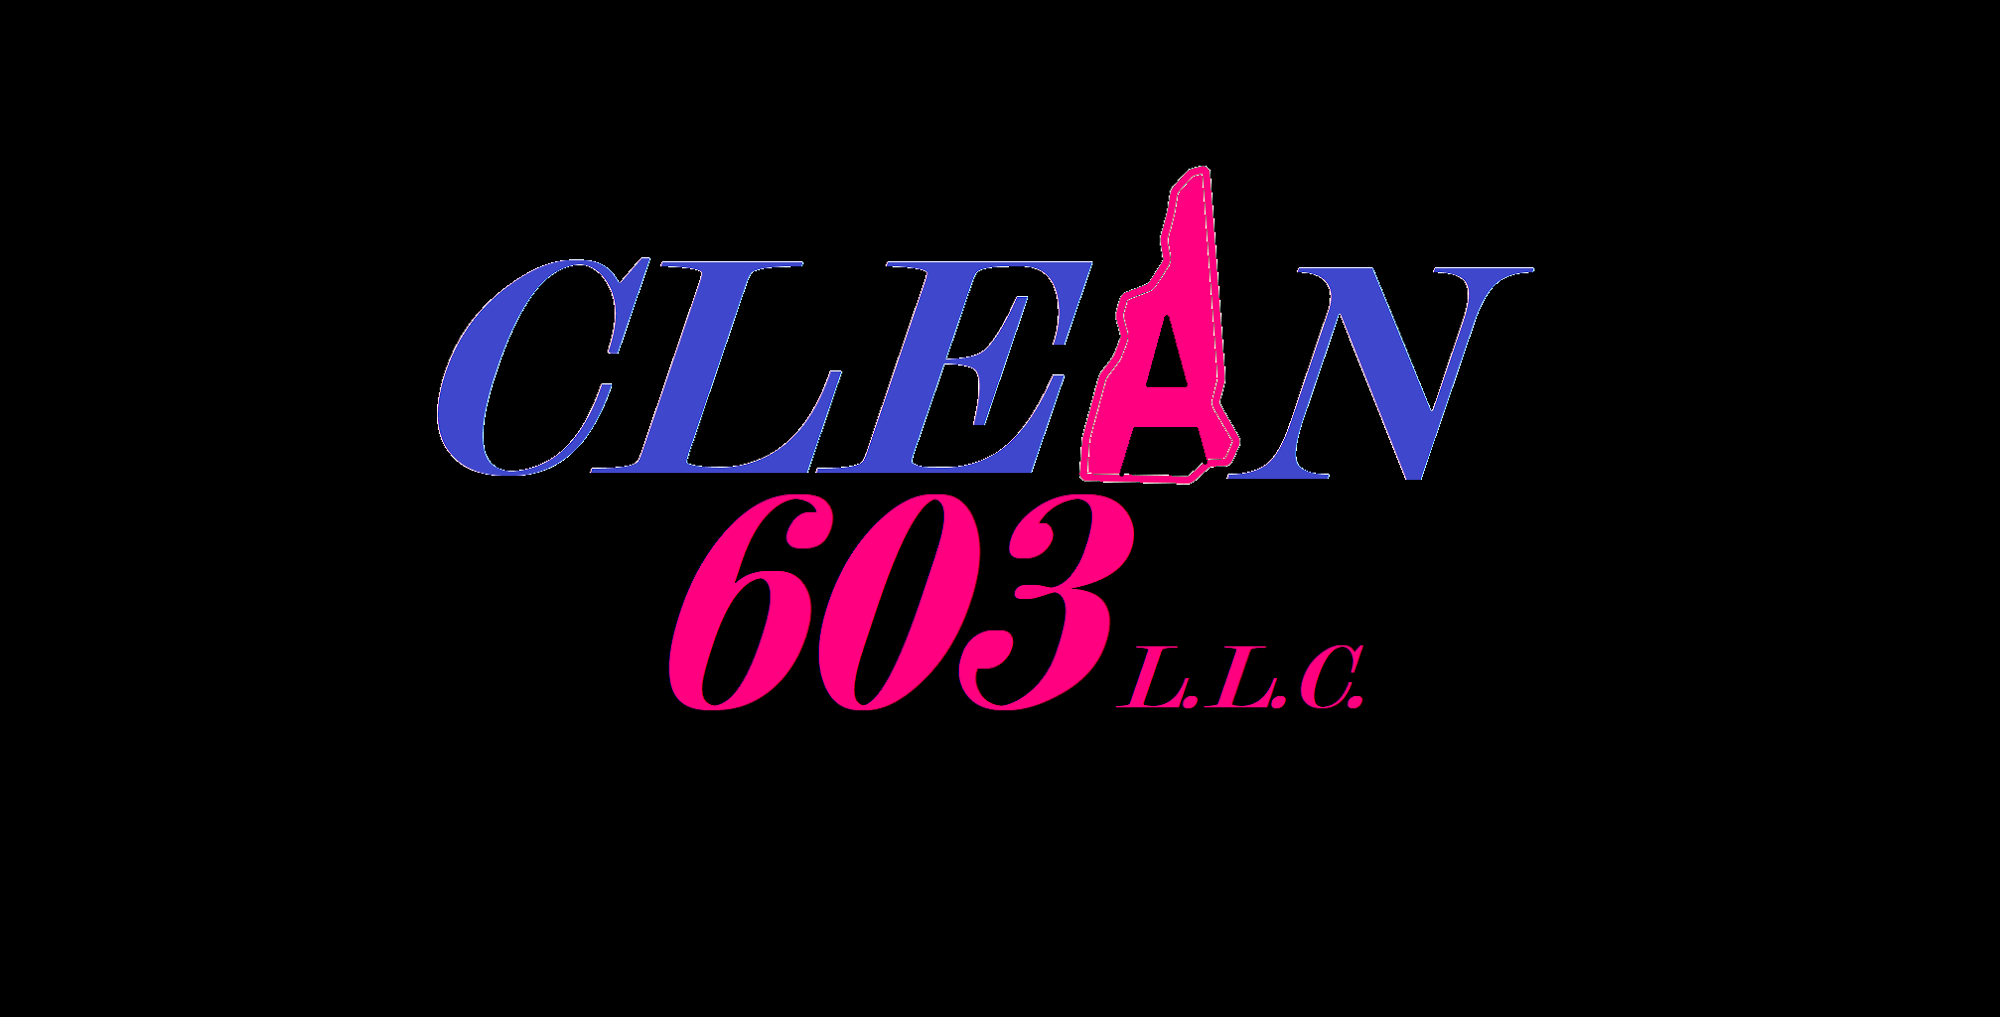 Clean 603 LLC 184 Tilton Hill Rd, Pittsfield New Hampshire 03263